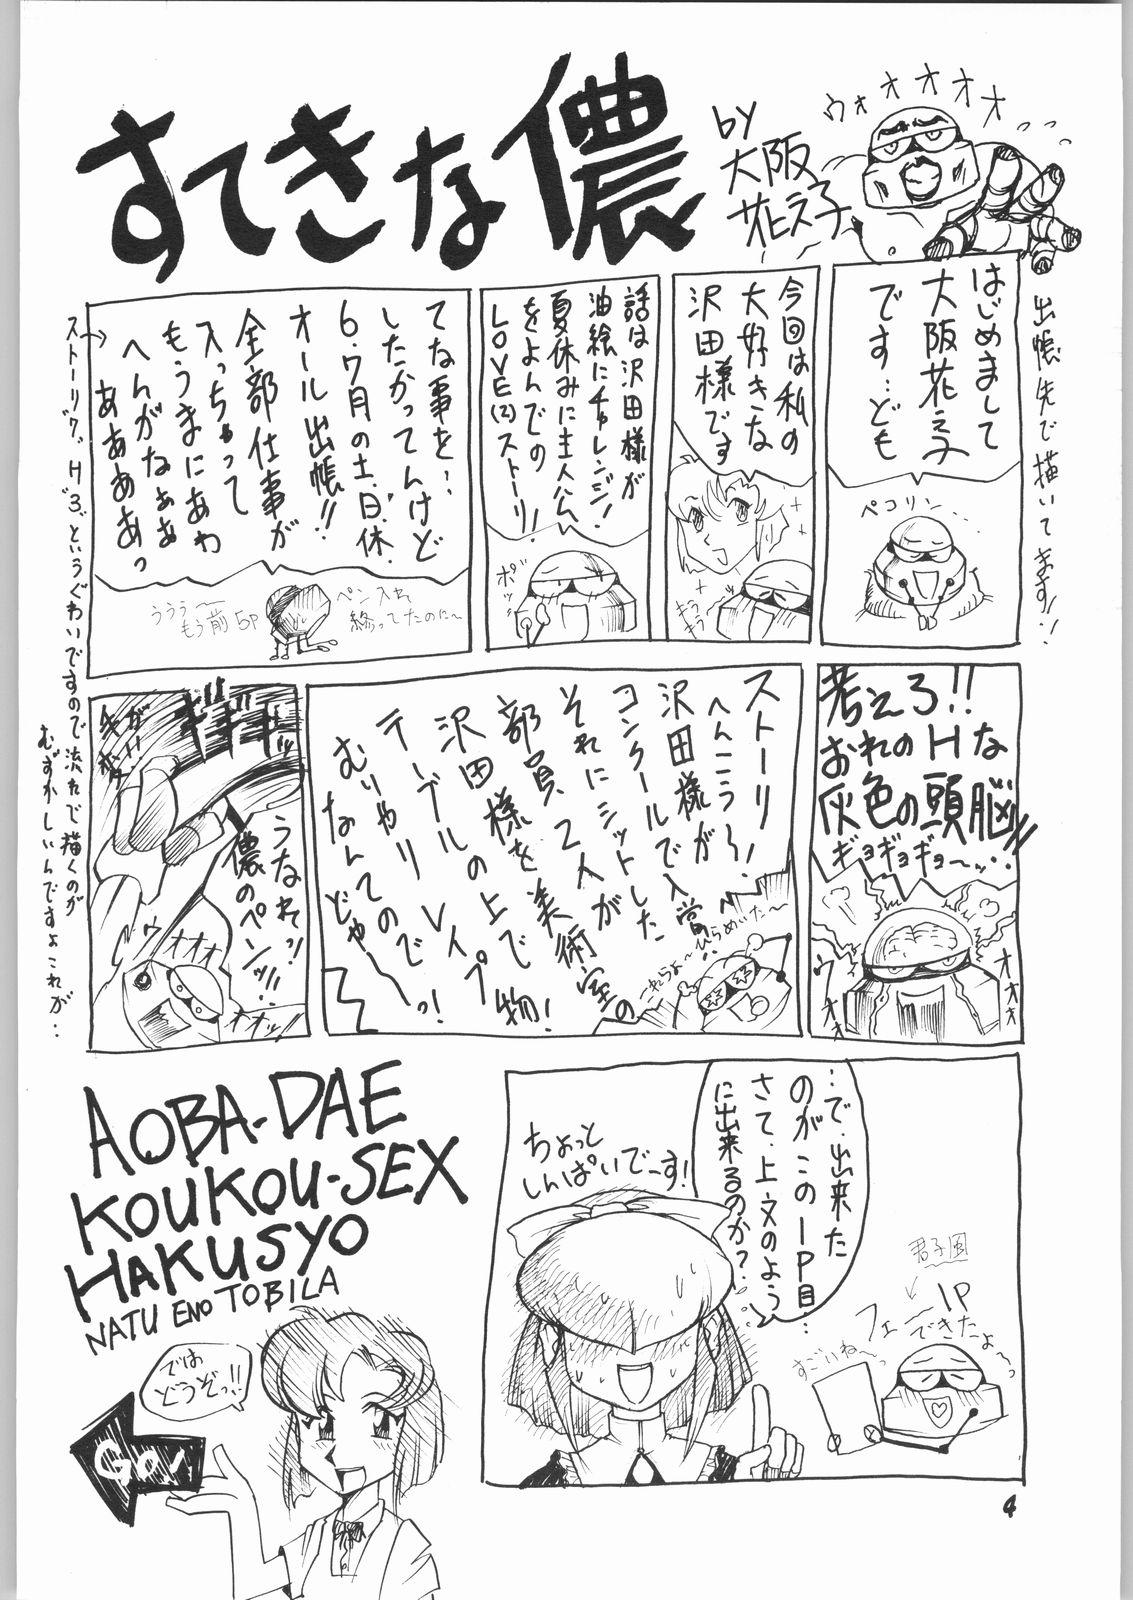 Redbone natsu eno tobira - True love story Old - Page 3